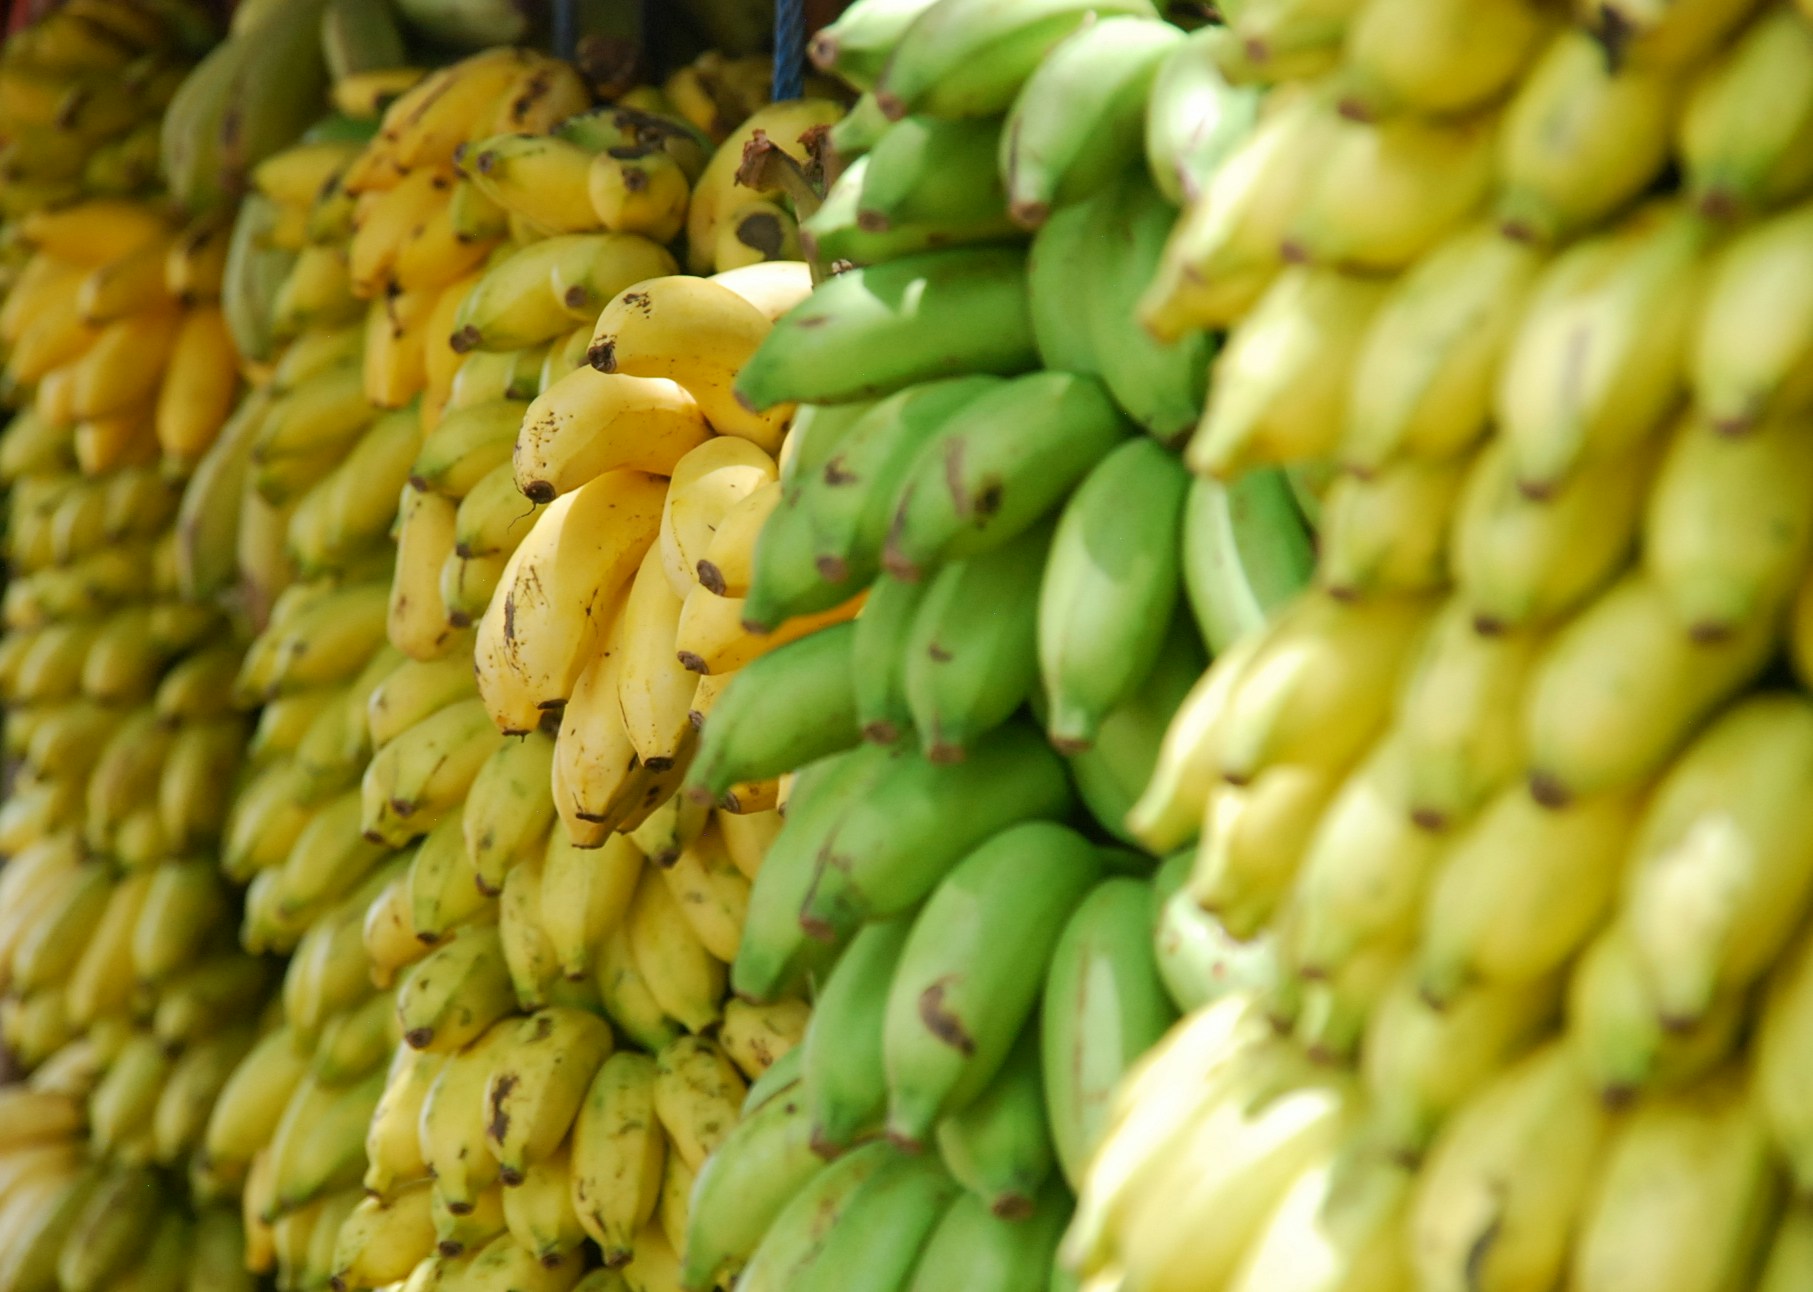 Impacts of Global Trade Policies on Banana Distribution